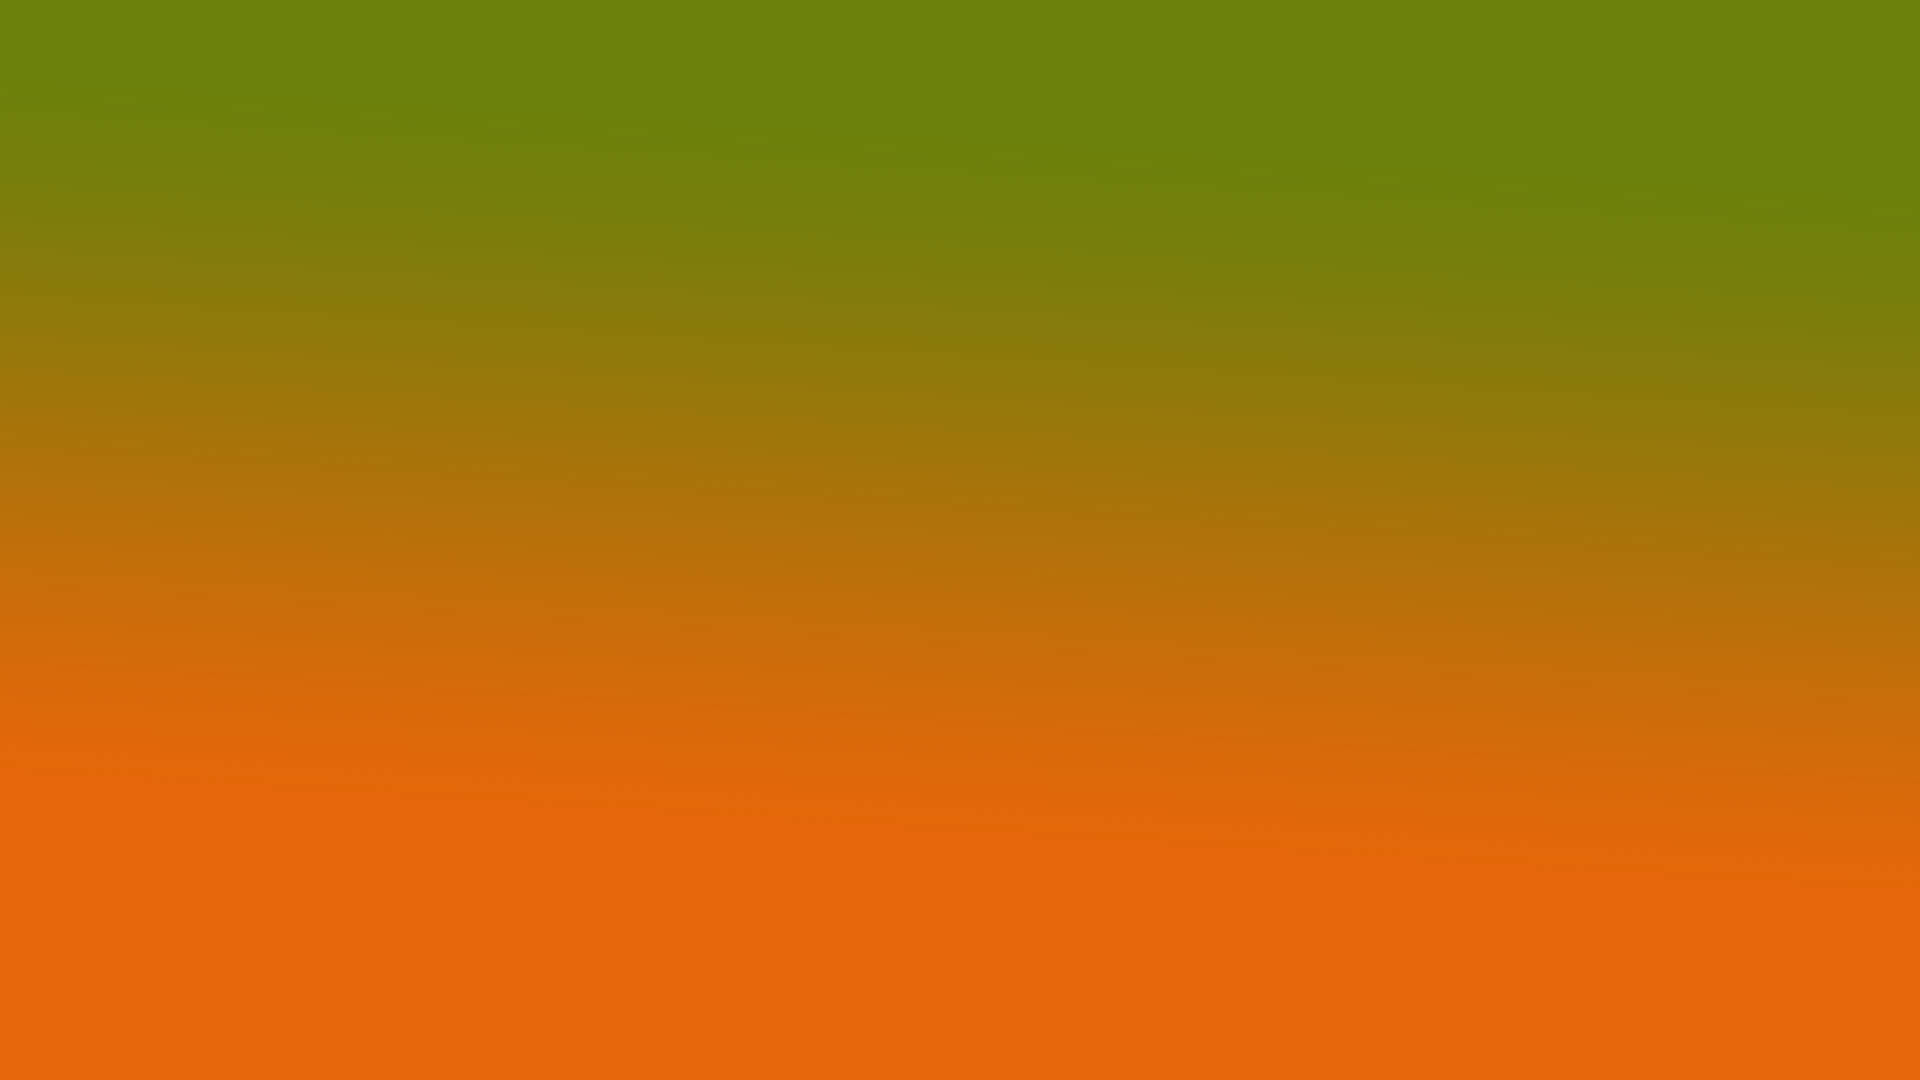 Sfondodesktop Arancione E Verde Uniforme Sfondo